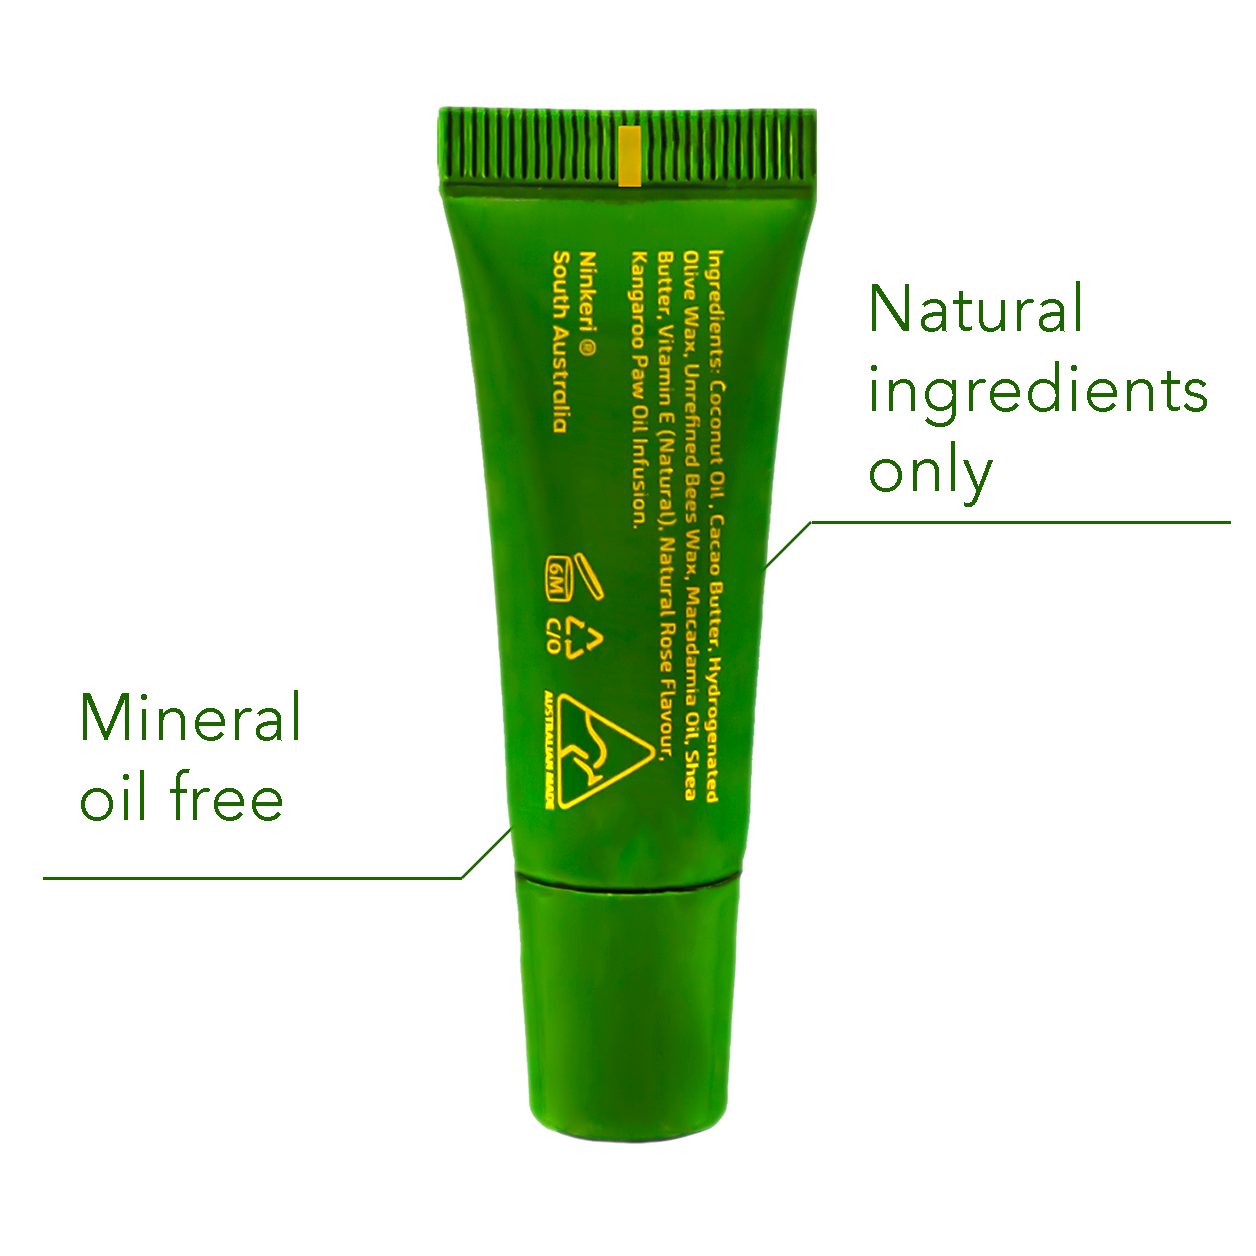 Natural Moisturising lip balm with Kangaroo Paw oil infusion, 10mL